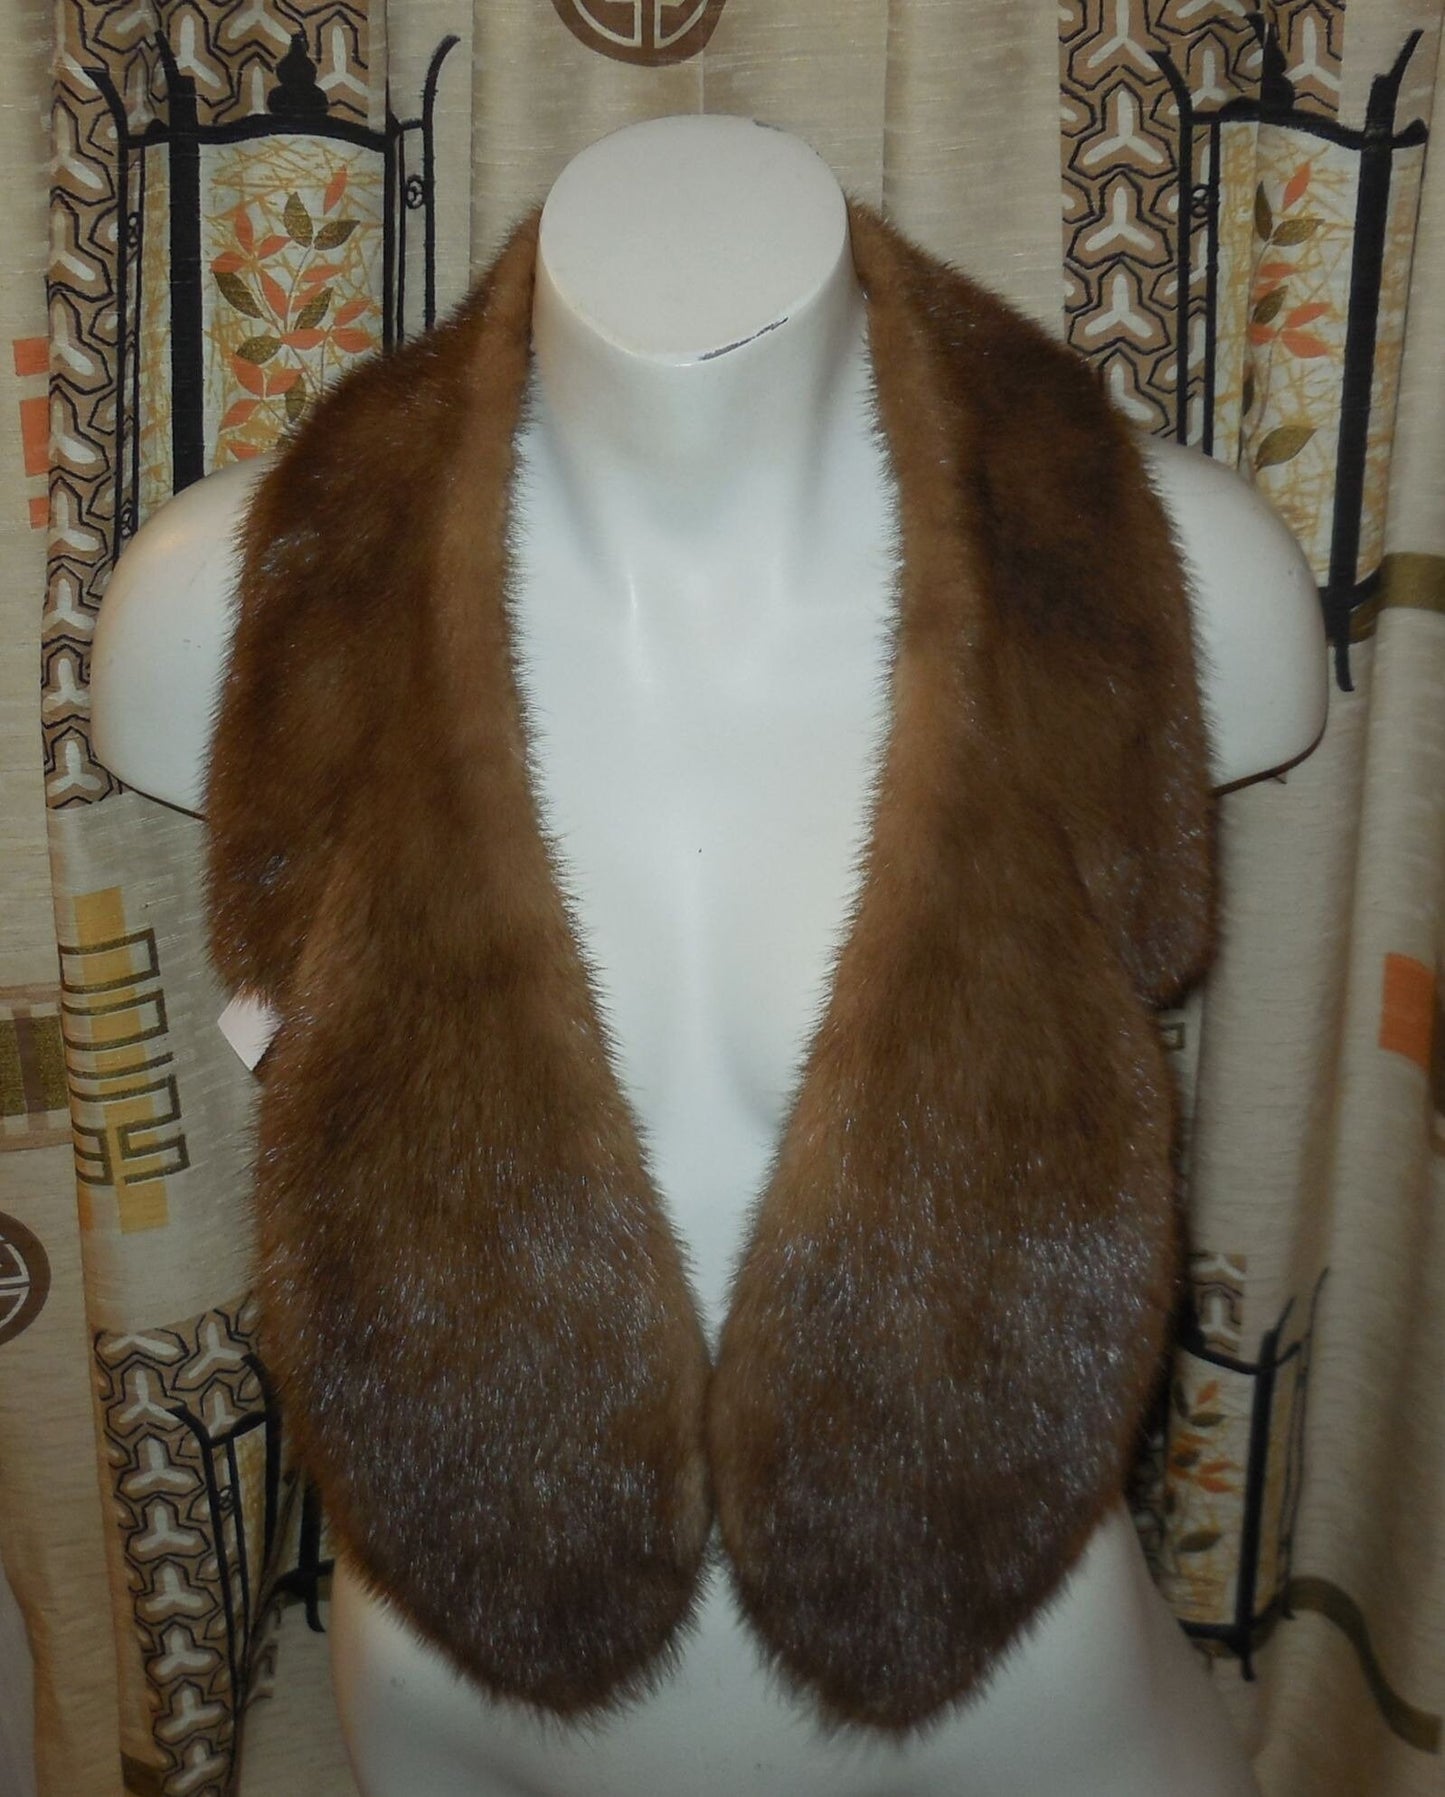 Vintage Fur Scarf 1950s 60s Light Brown Mink Fur Stole Tear Drop Shape Elegant Mink Fur Collar Boho 45 inches long